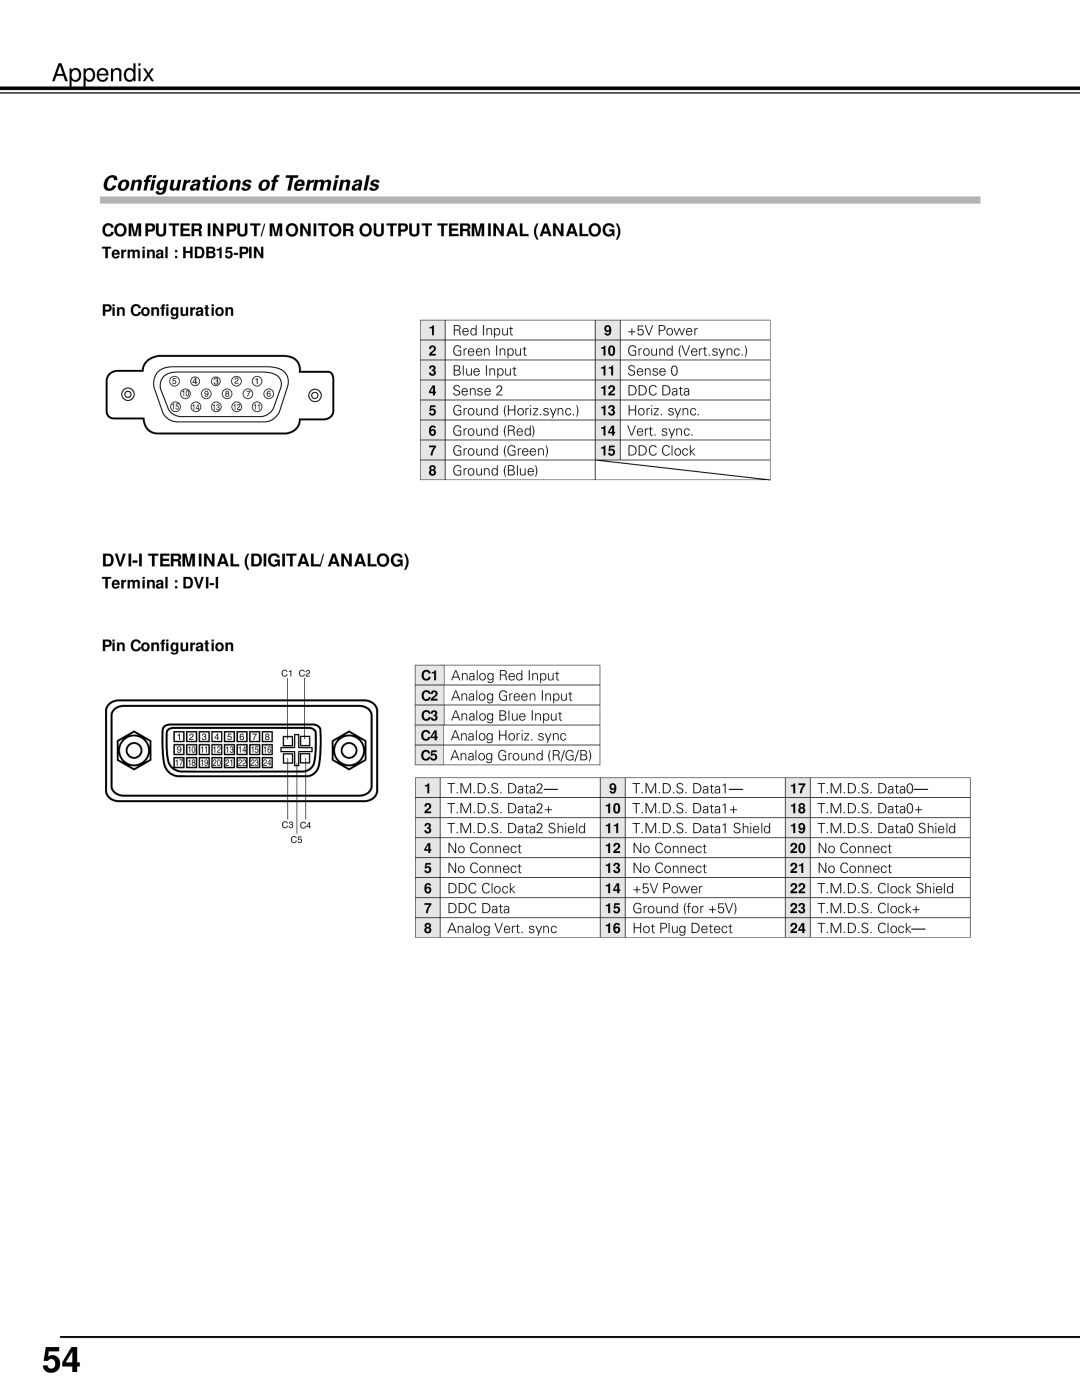 Sanyo PLC-XU60 Configurations of Terminals, Terminal HDB15-PIN Pin Configuration, Terminal DVI-I Pin Configuration 